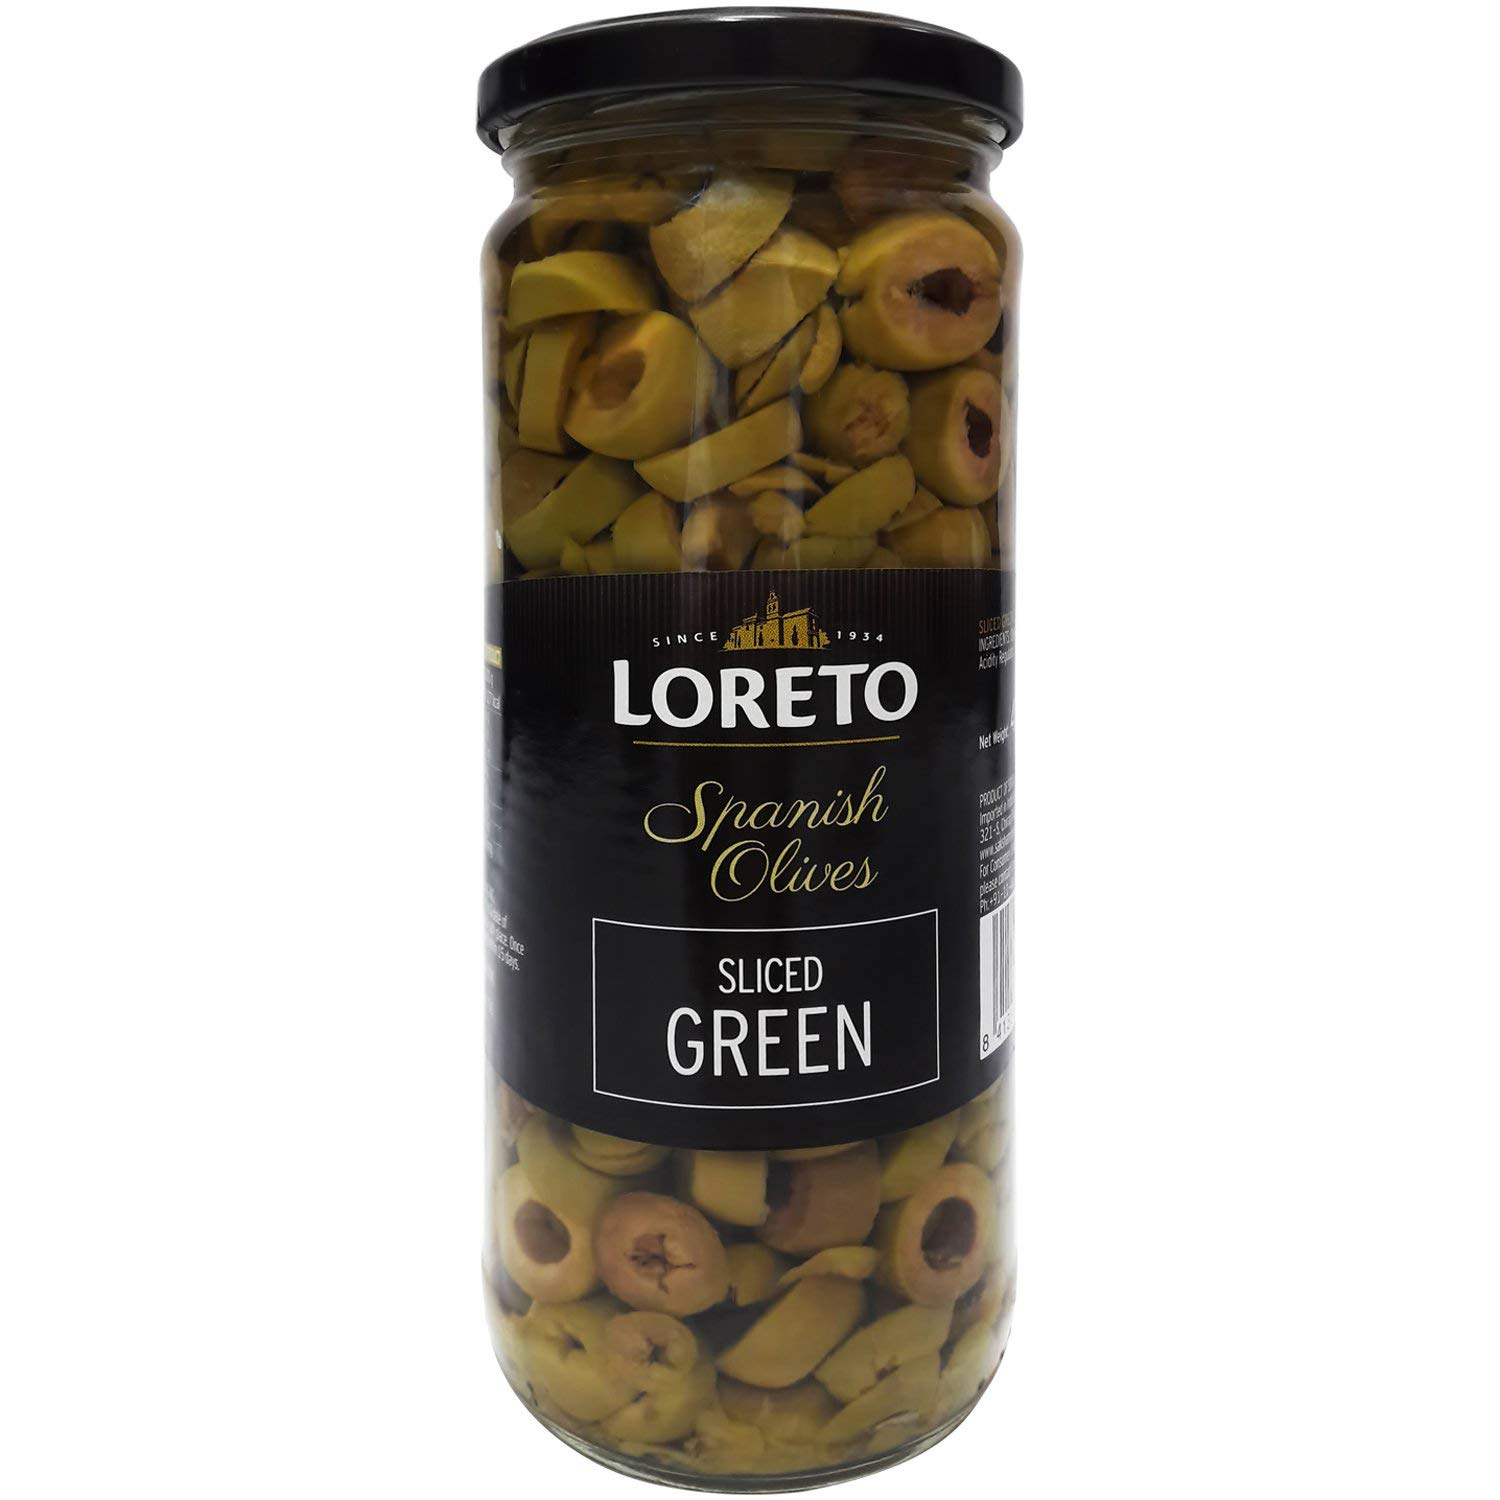 Loreto Sliced Green Olives Image